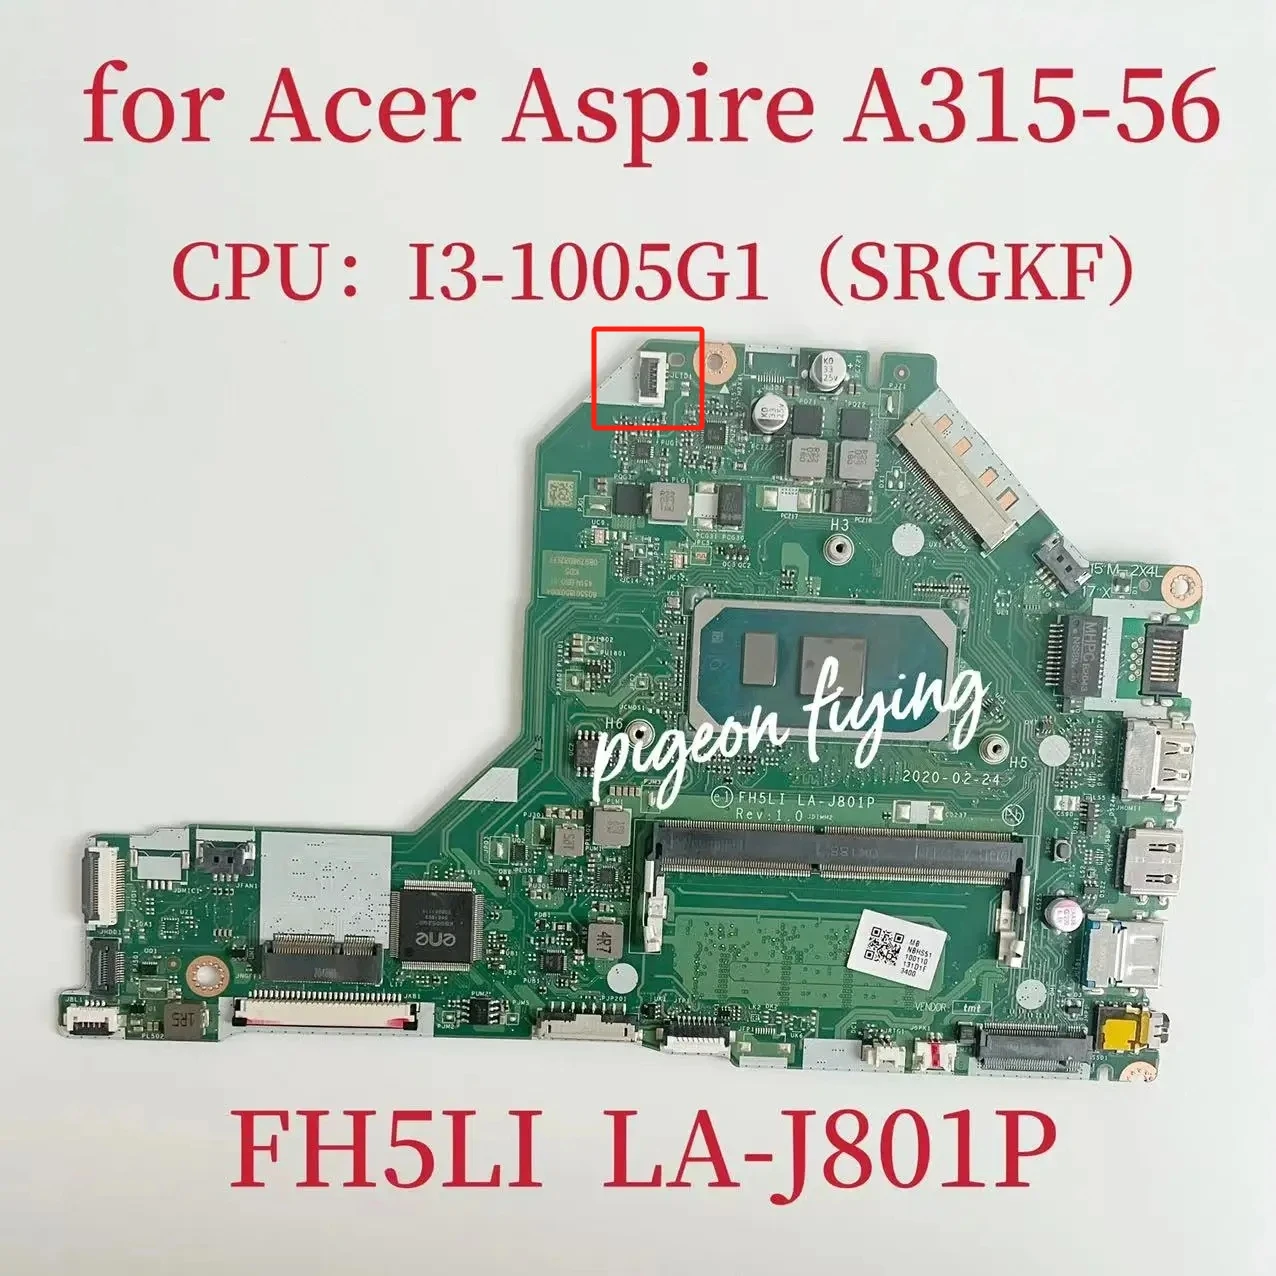 

FH5LI LA-J801P Mainboard For Acer Aspire A315-56 Laptop Motherboard W/ i3-1005G1 CPU 4GB RAM NBHS511001 DDR4 MB 100% Test Ok